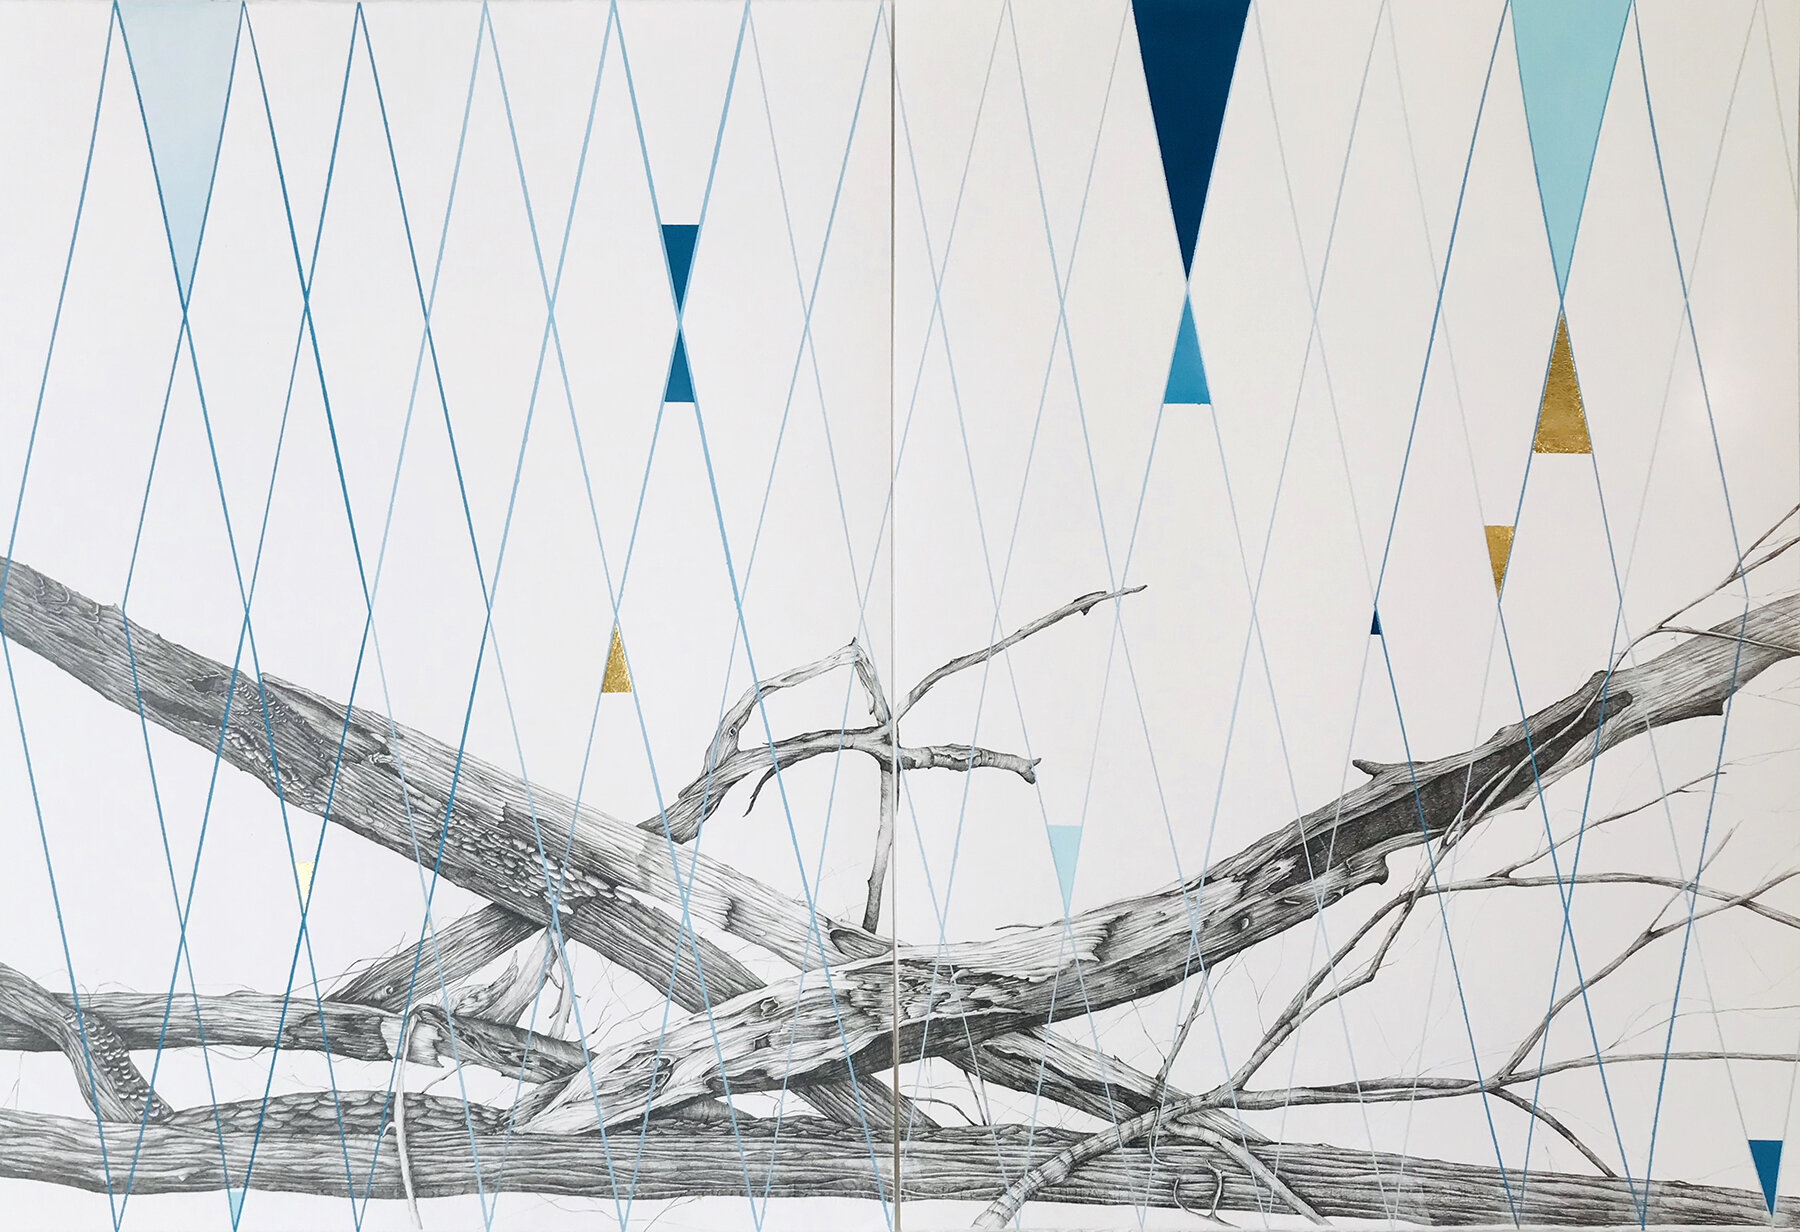 KIKI GAFFNEY | Variations, 30 x 45 inches / 76.2 x 114.3 cm, acrylic, graphite, gold leaf on paper, 2020